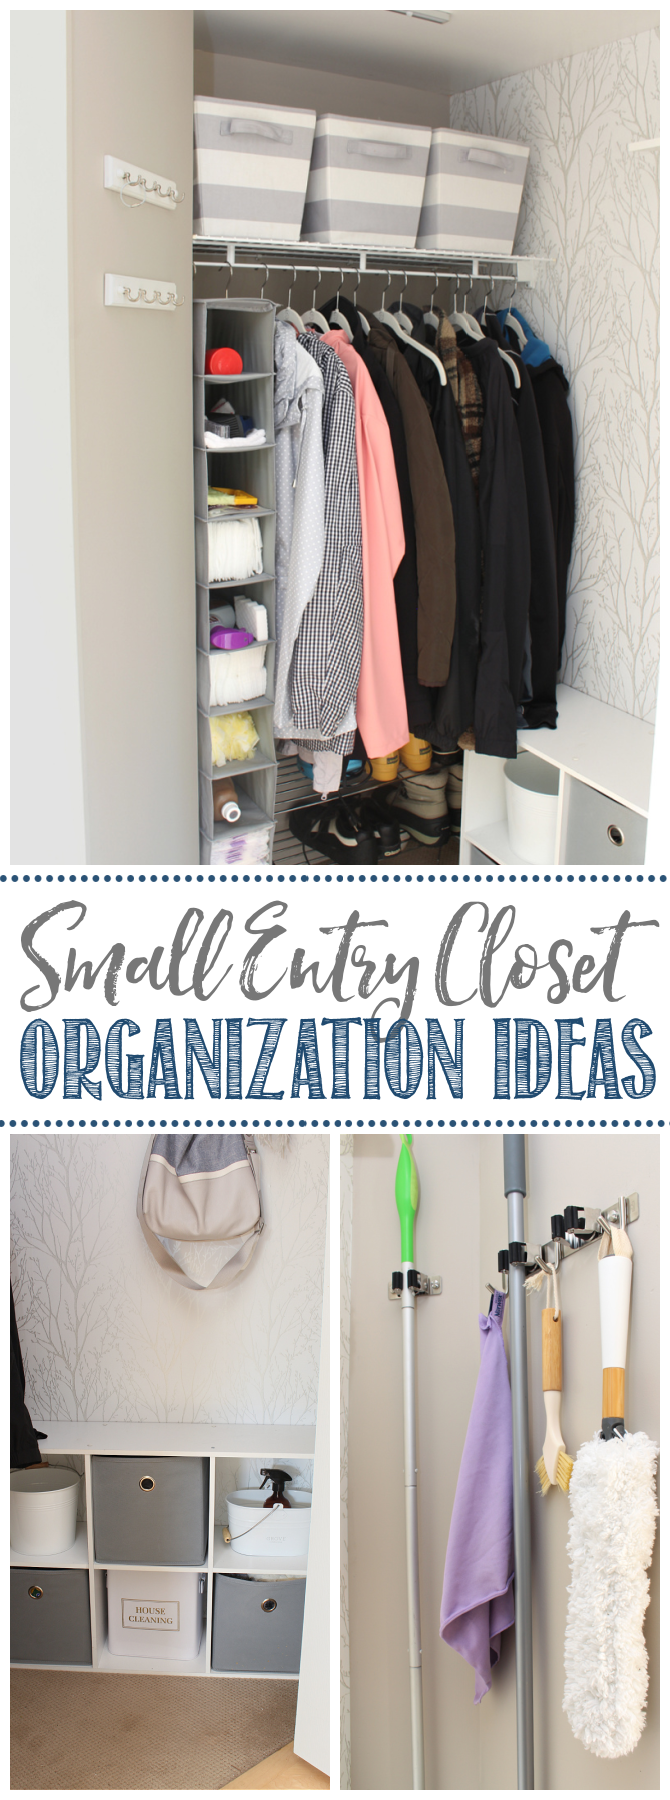 Small Closet Organization and Storage Ideas, How to Organize a Small Closet